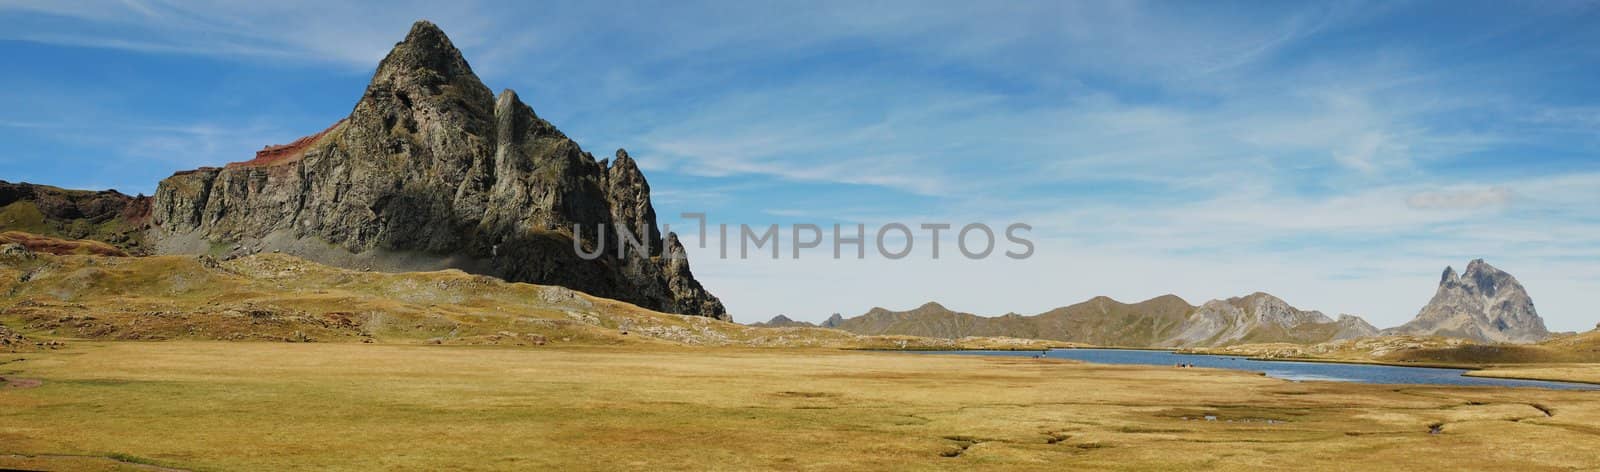 Panorama of Anayet peak and plateau by dariya64